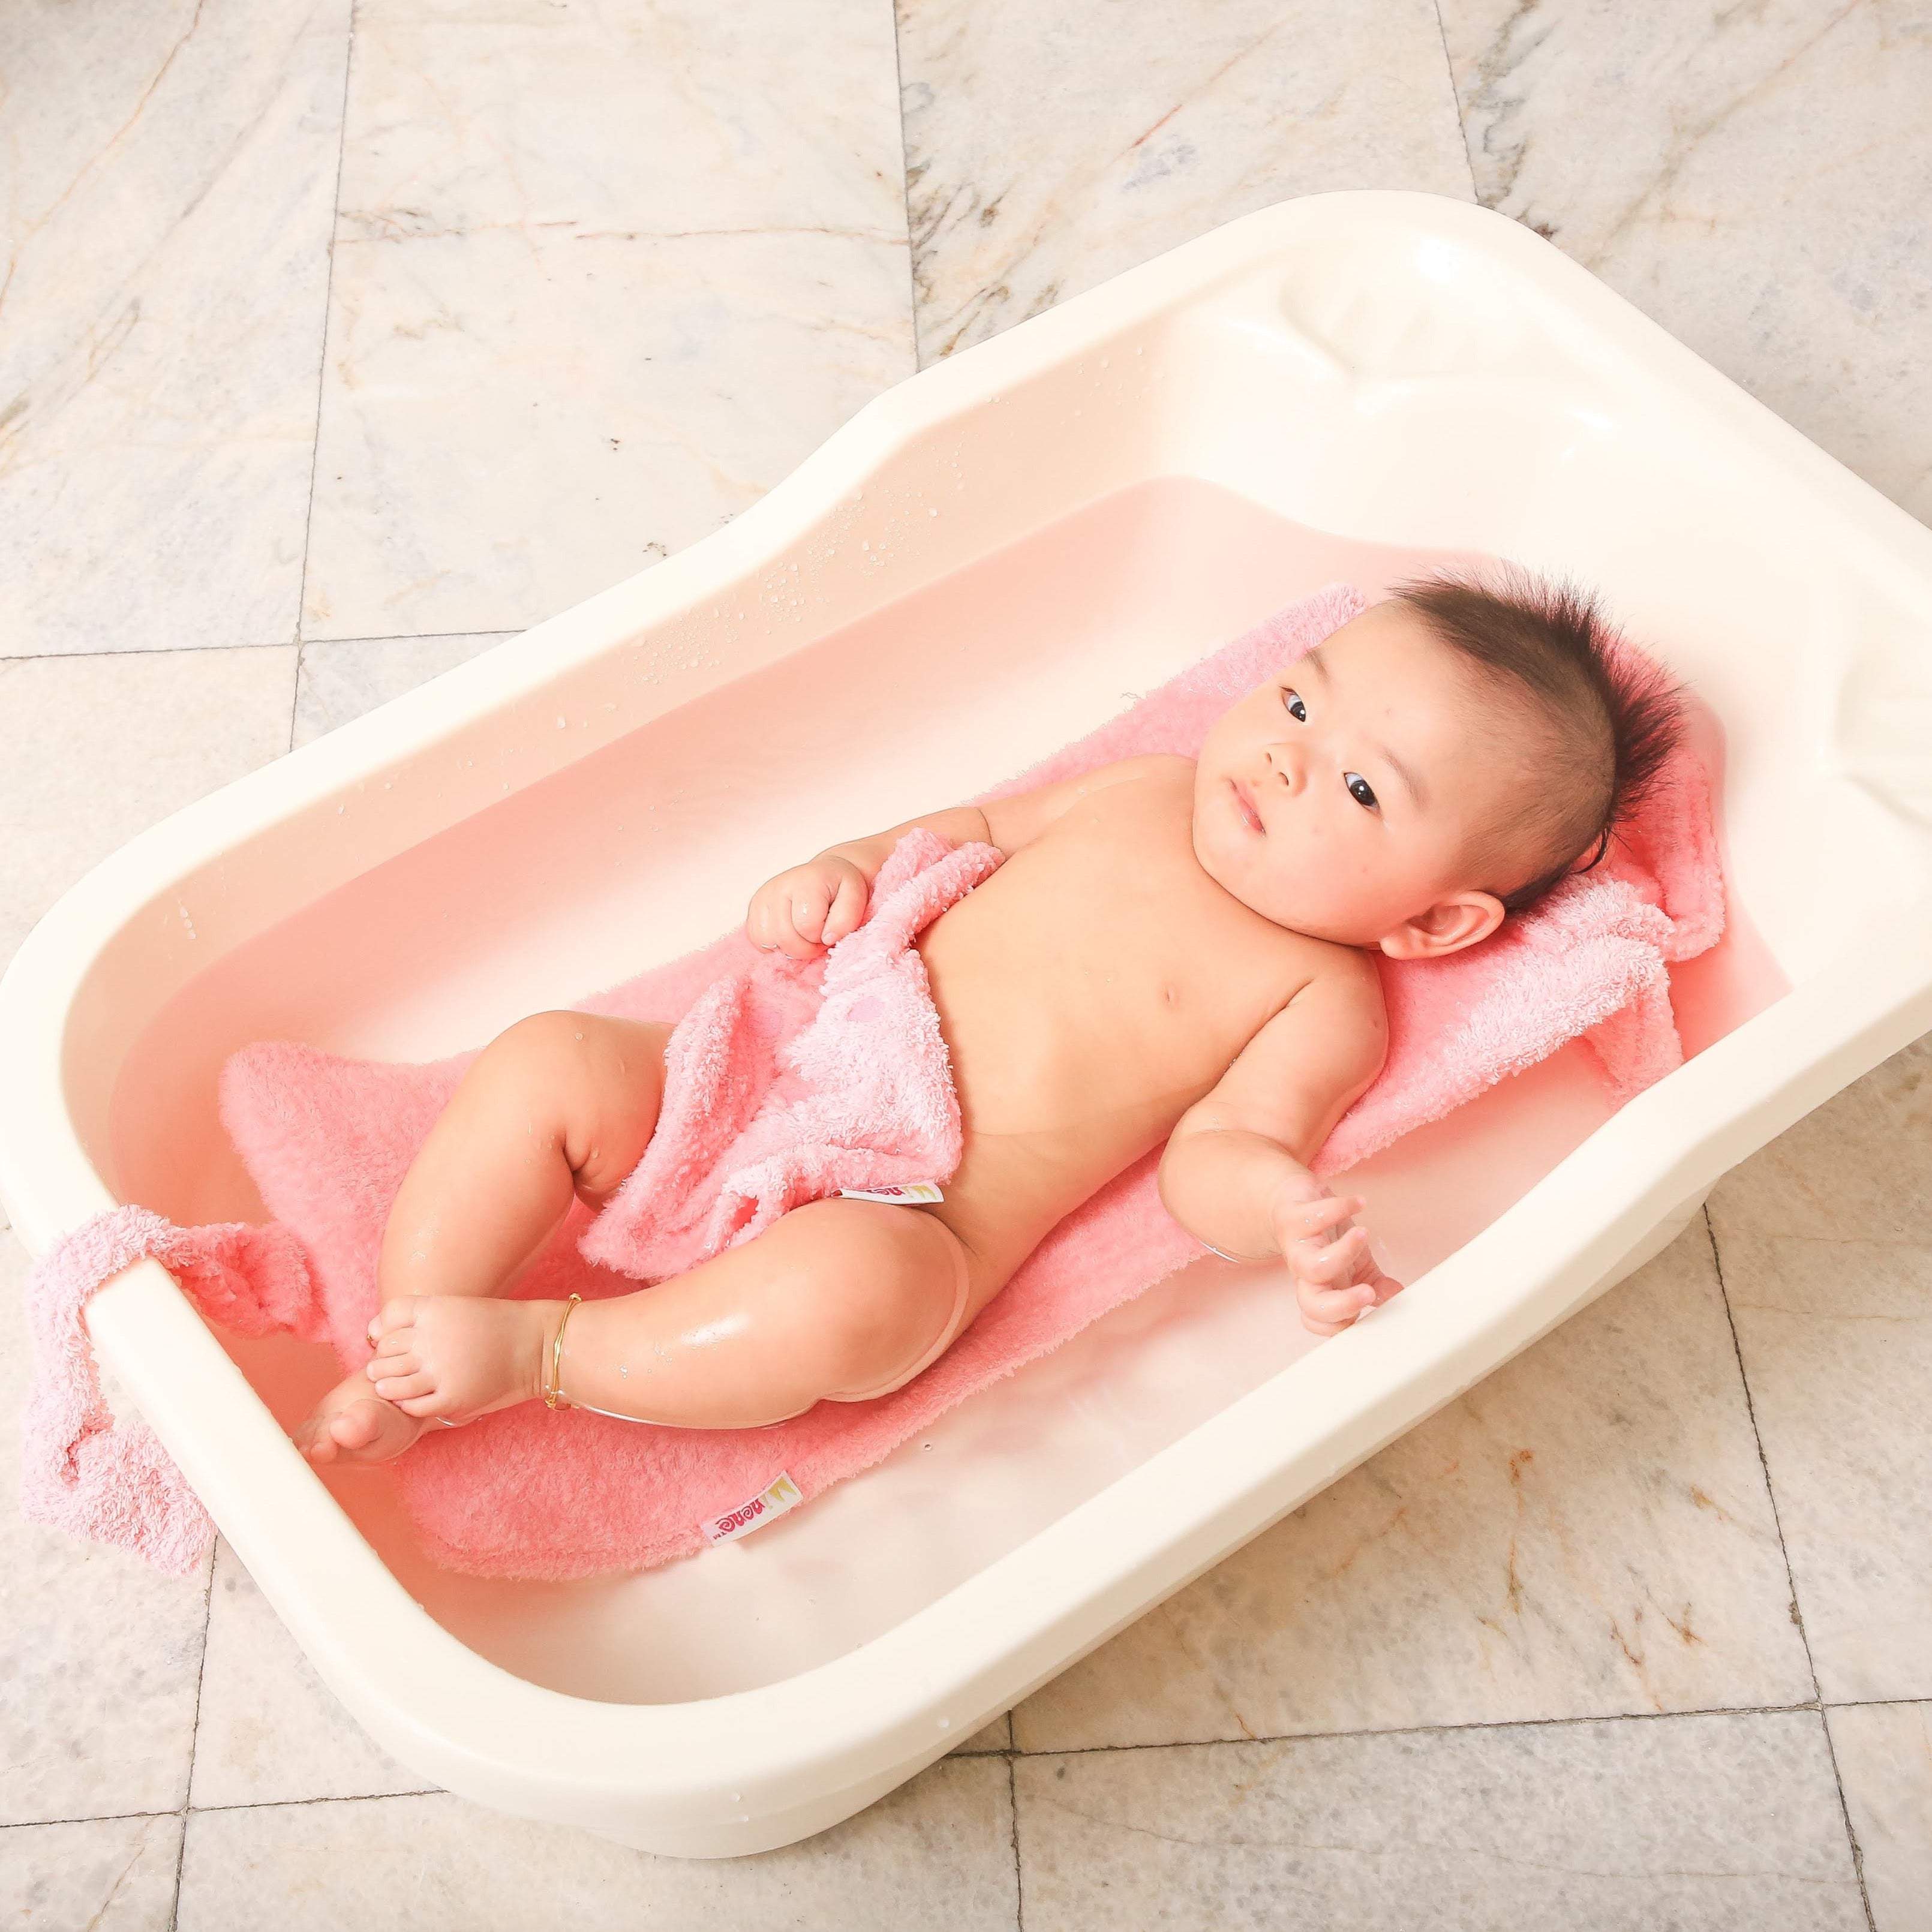 Bath Support for Infants